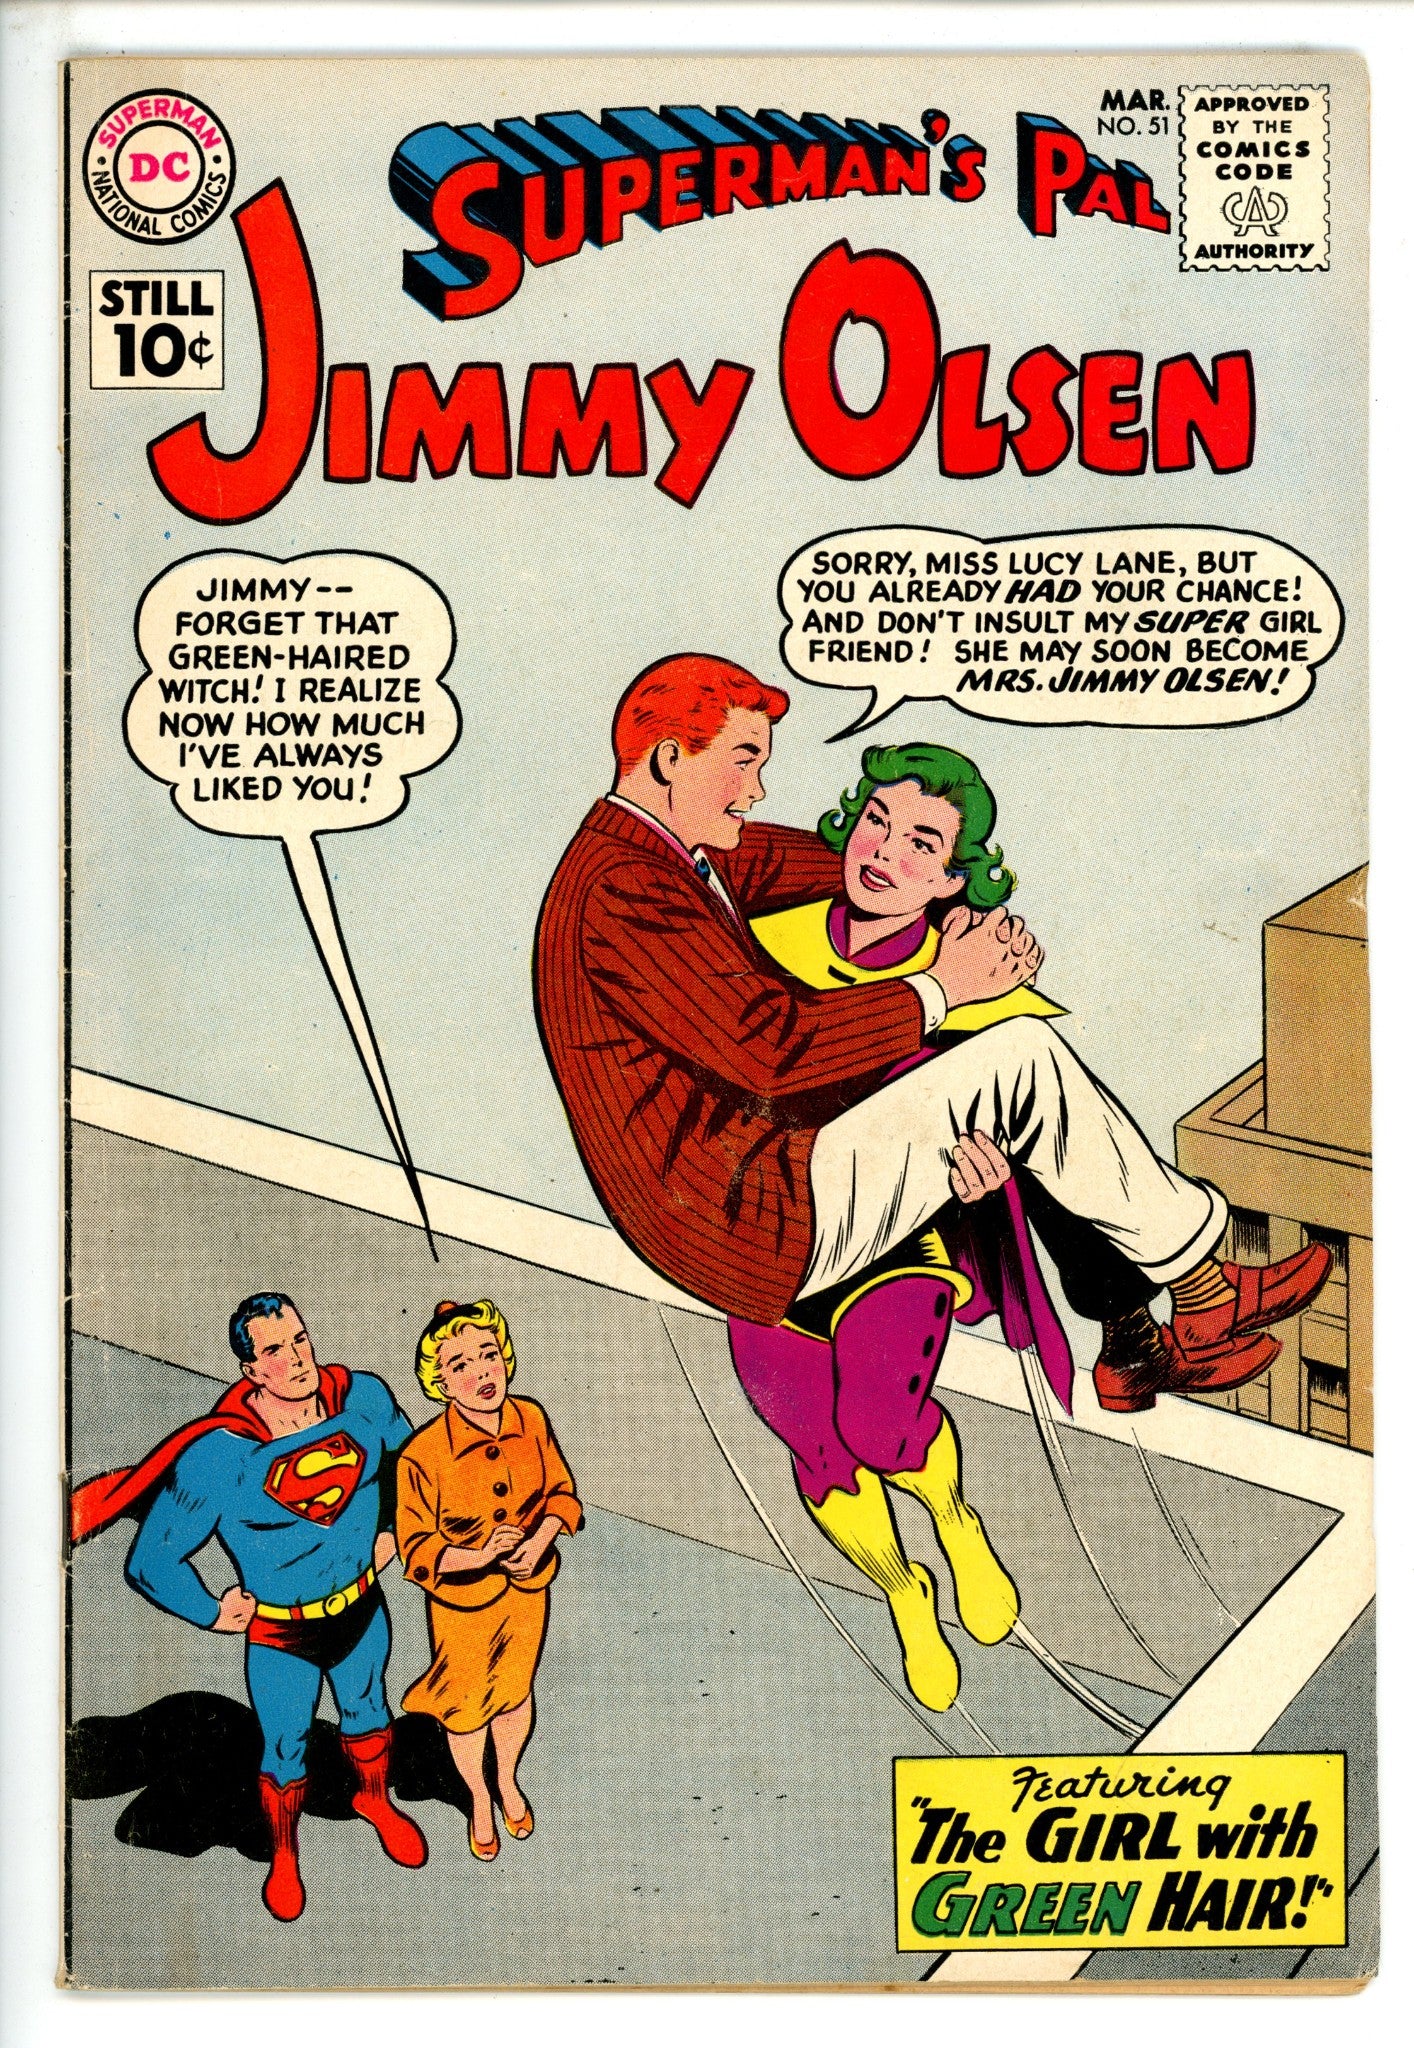 Superman's Pal, Jimmy Olsen 51 VG+ (1961)